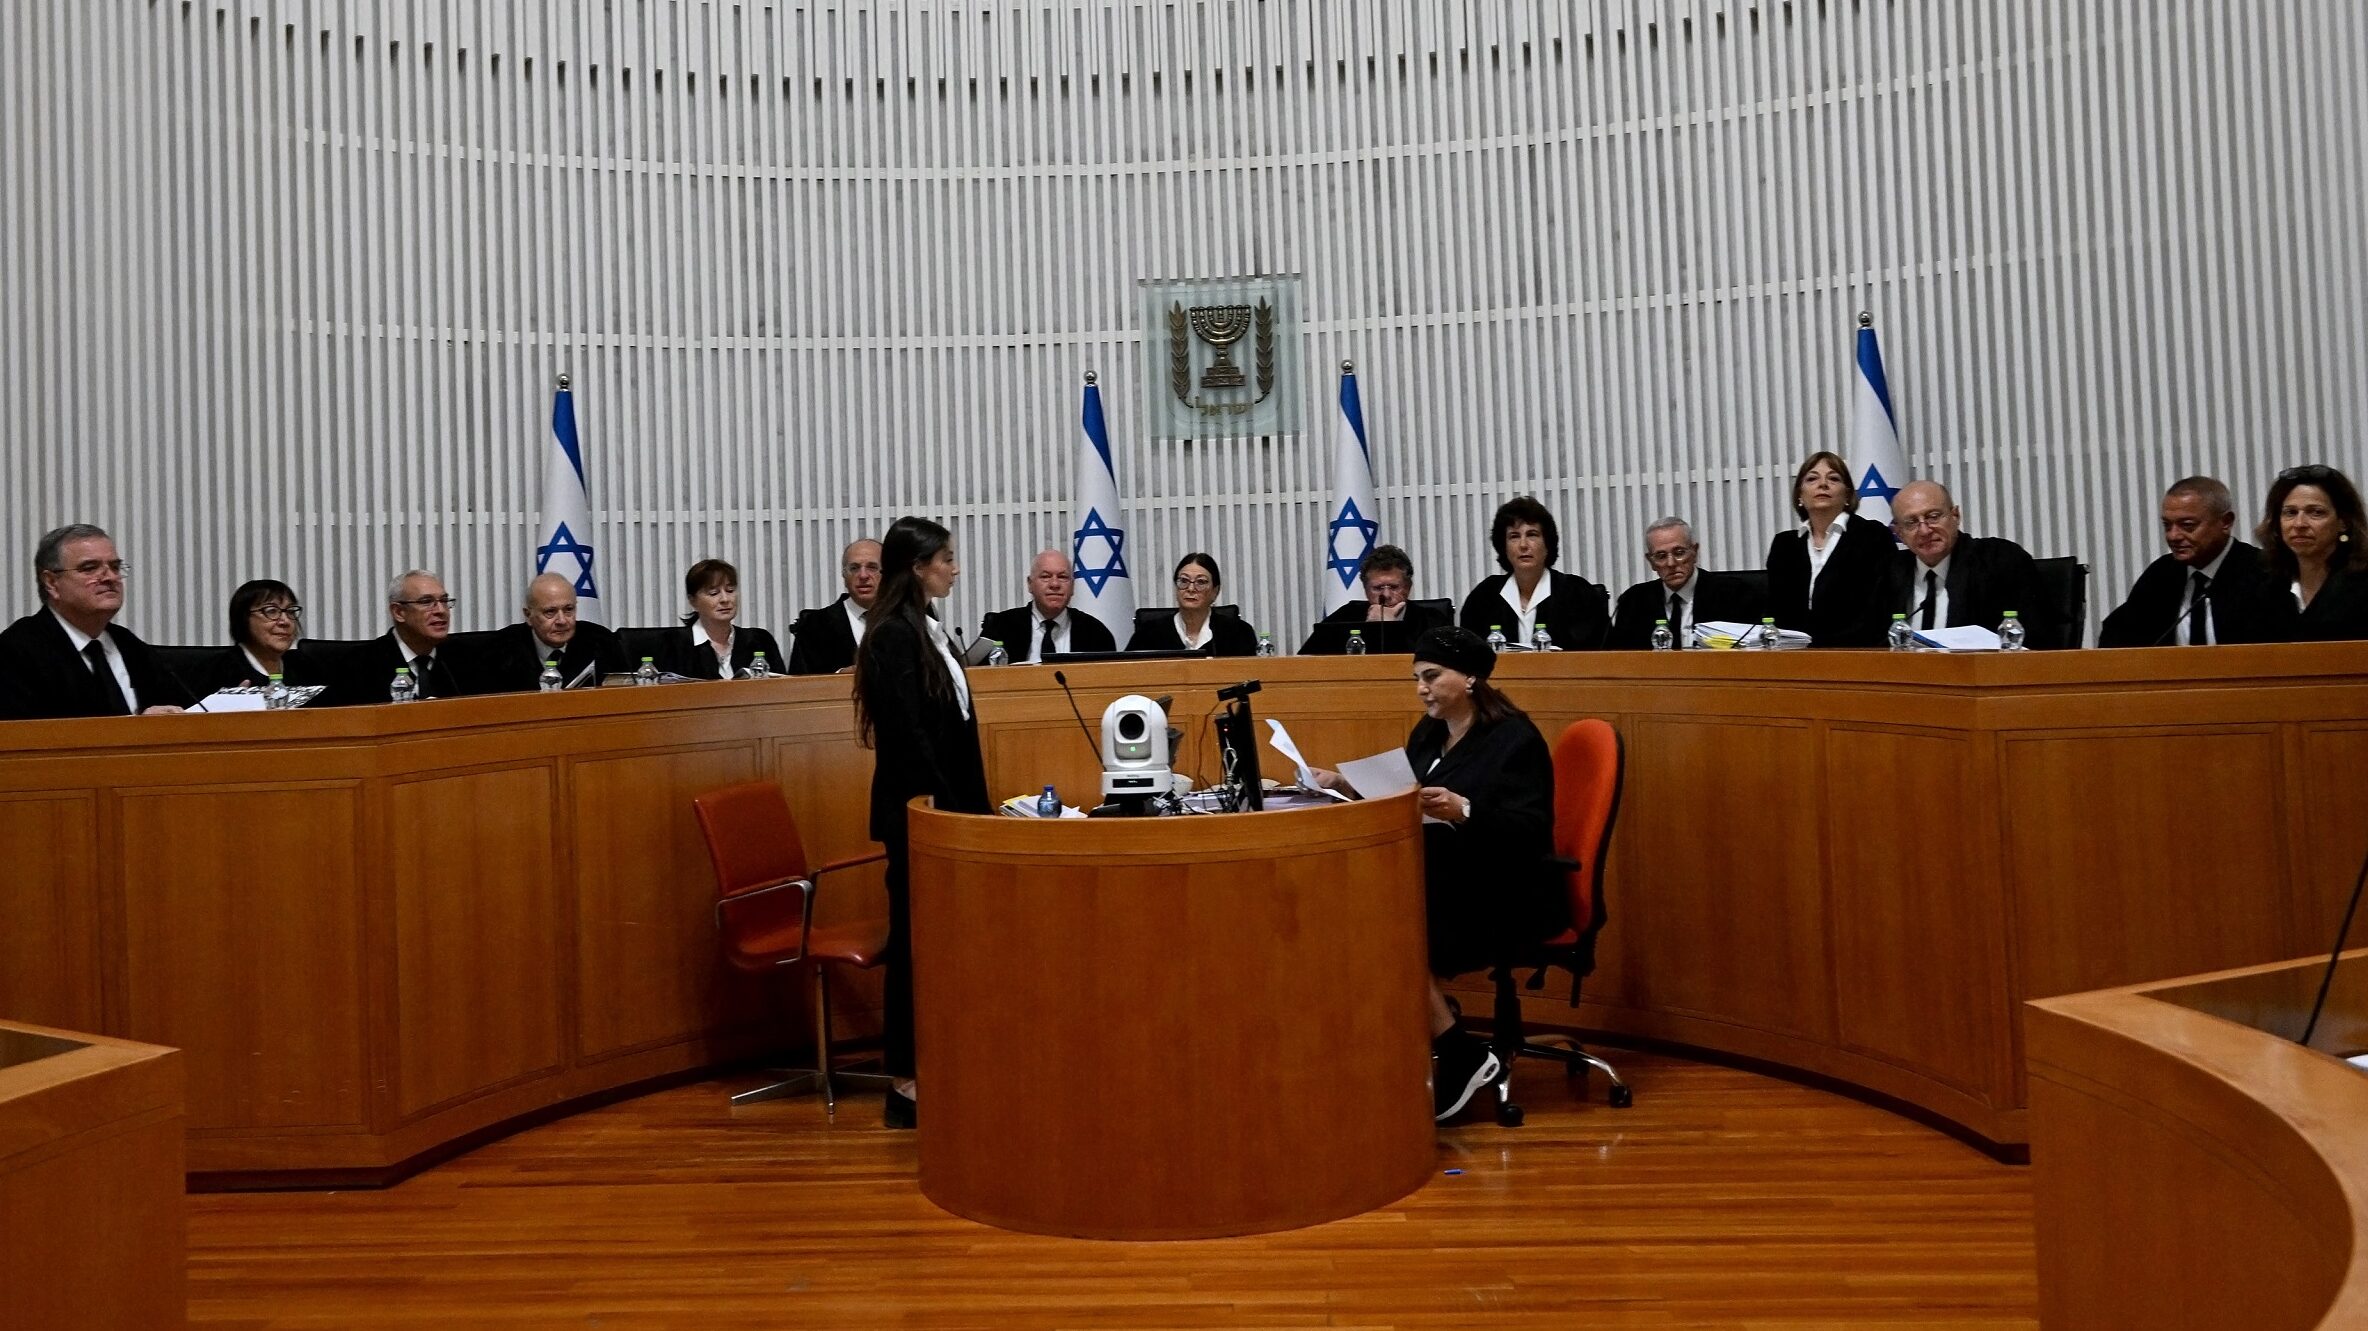 Netanyahu’s Judicial Overhaul Faces Landmark Legal Challenge in Israel